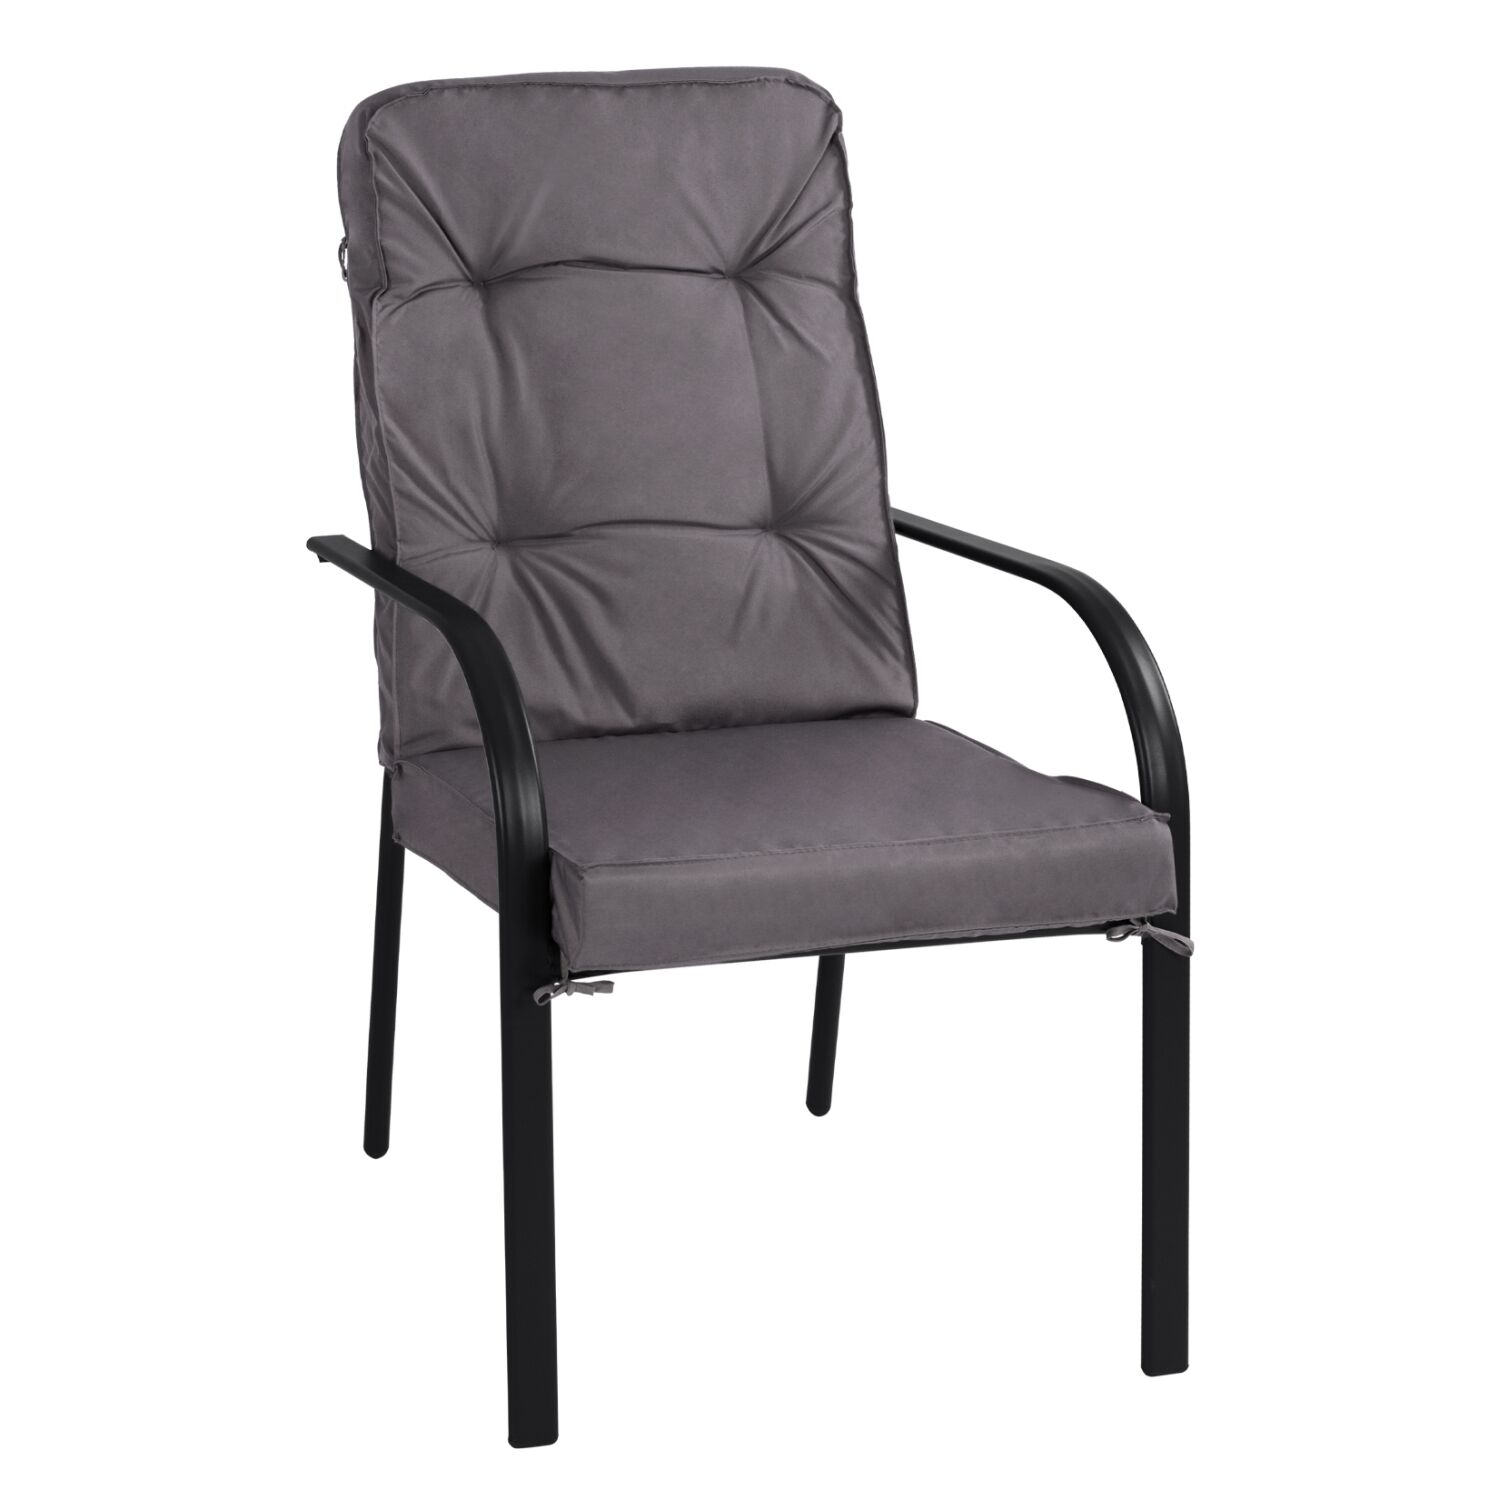 Metallic armchair Endika HM5680.01 Grey color with pillow 60x71x105cm